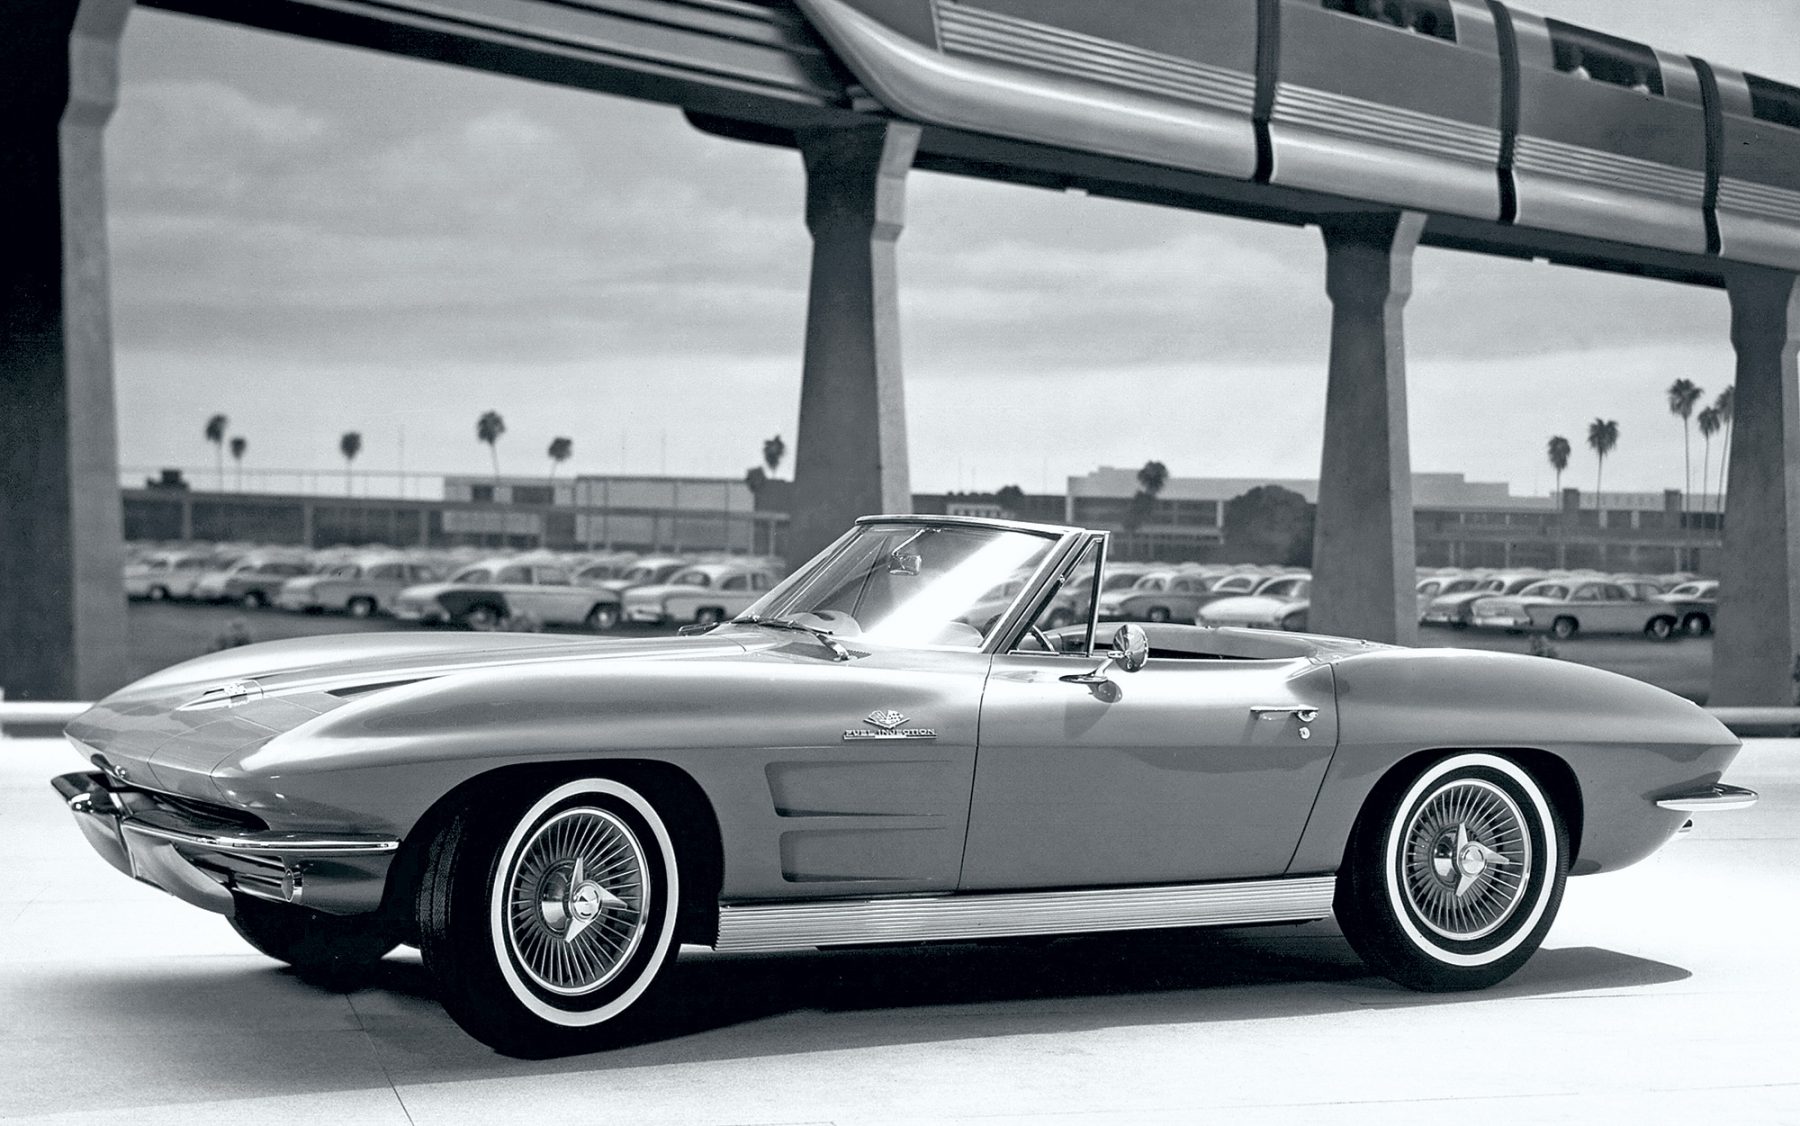 1963 Corvette Convertible